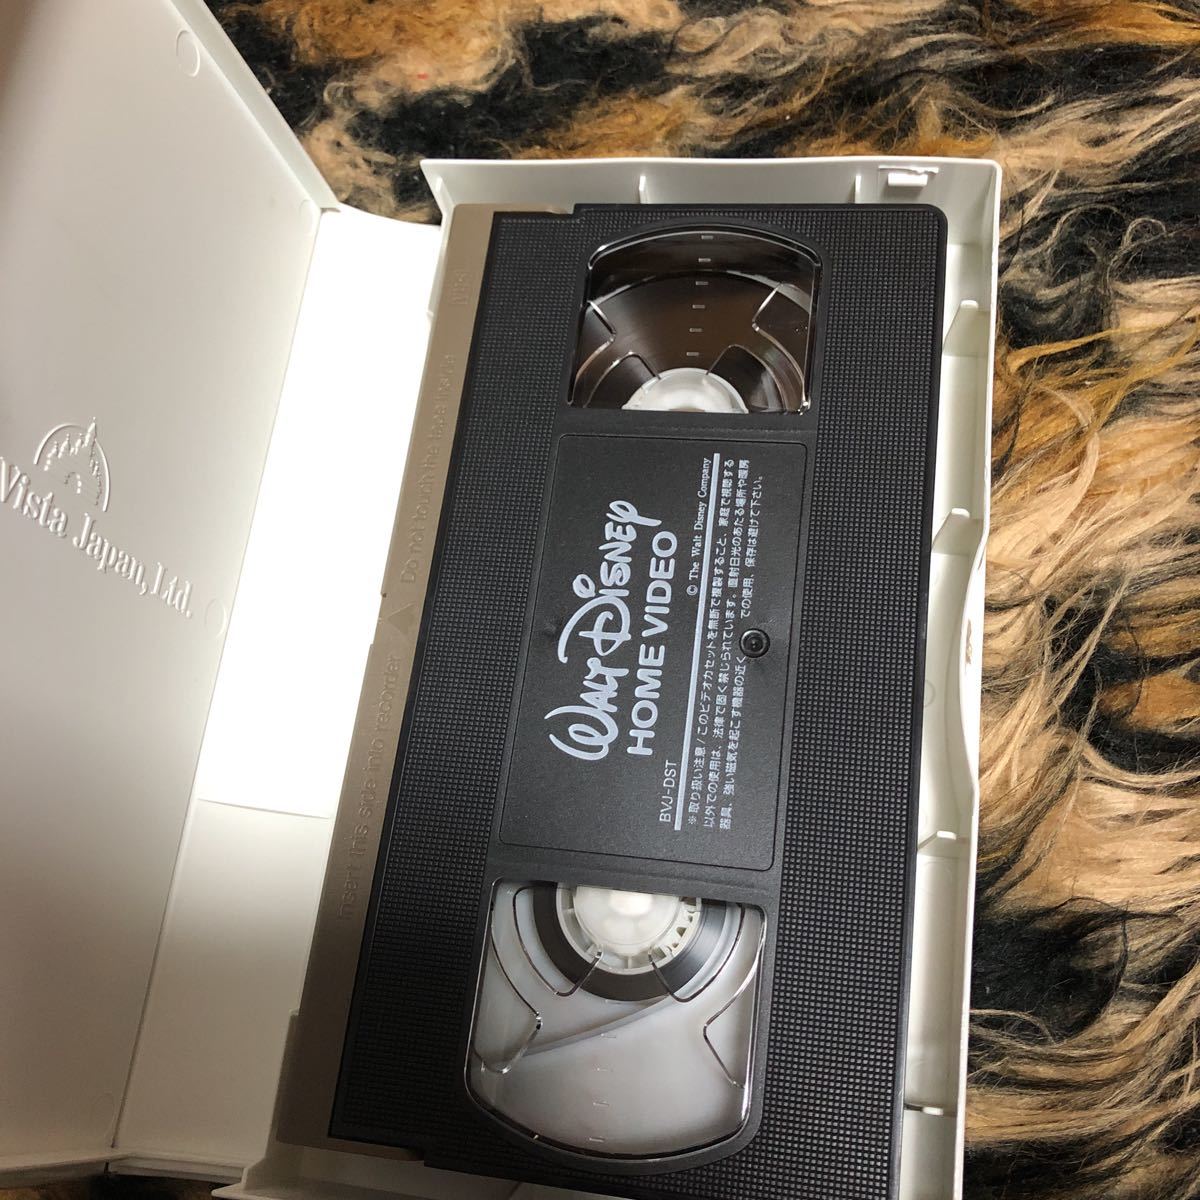  Disney Mulan VHS video 